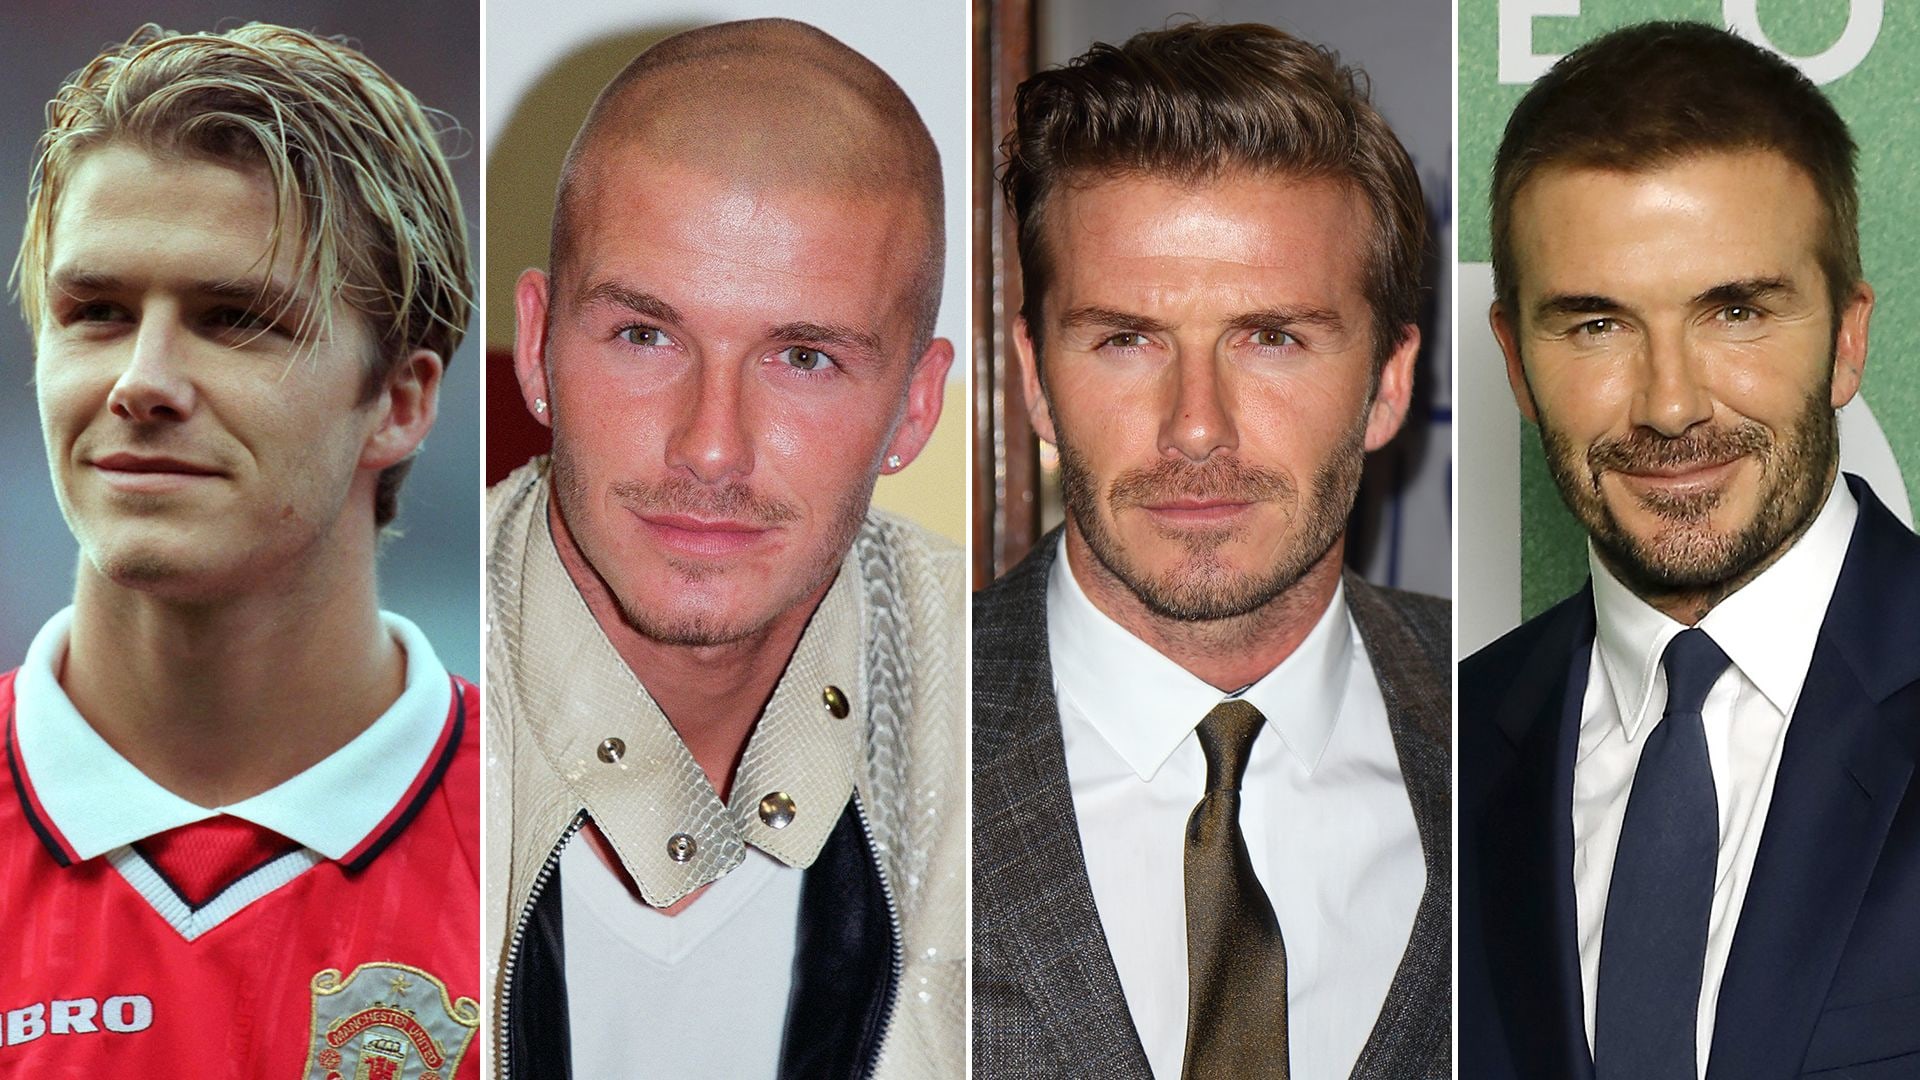 David Beckham's hair through the years